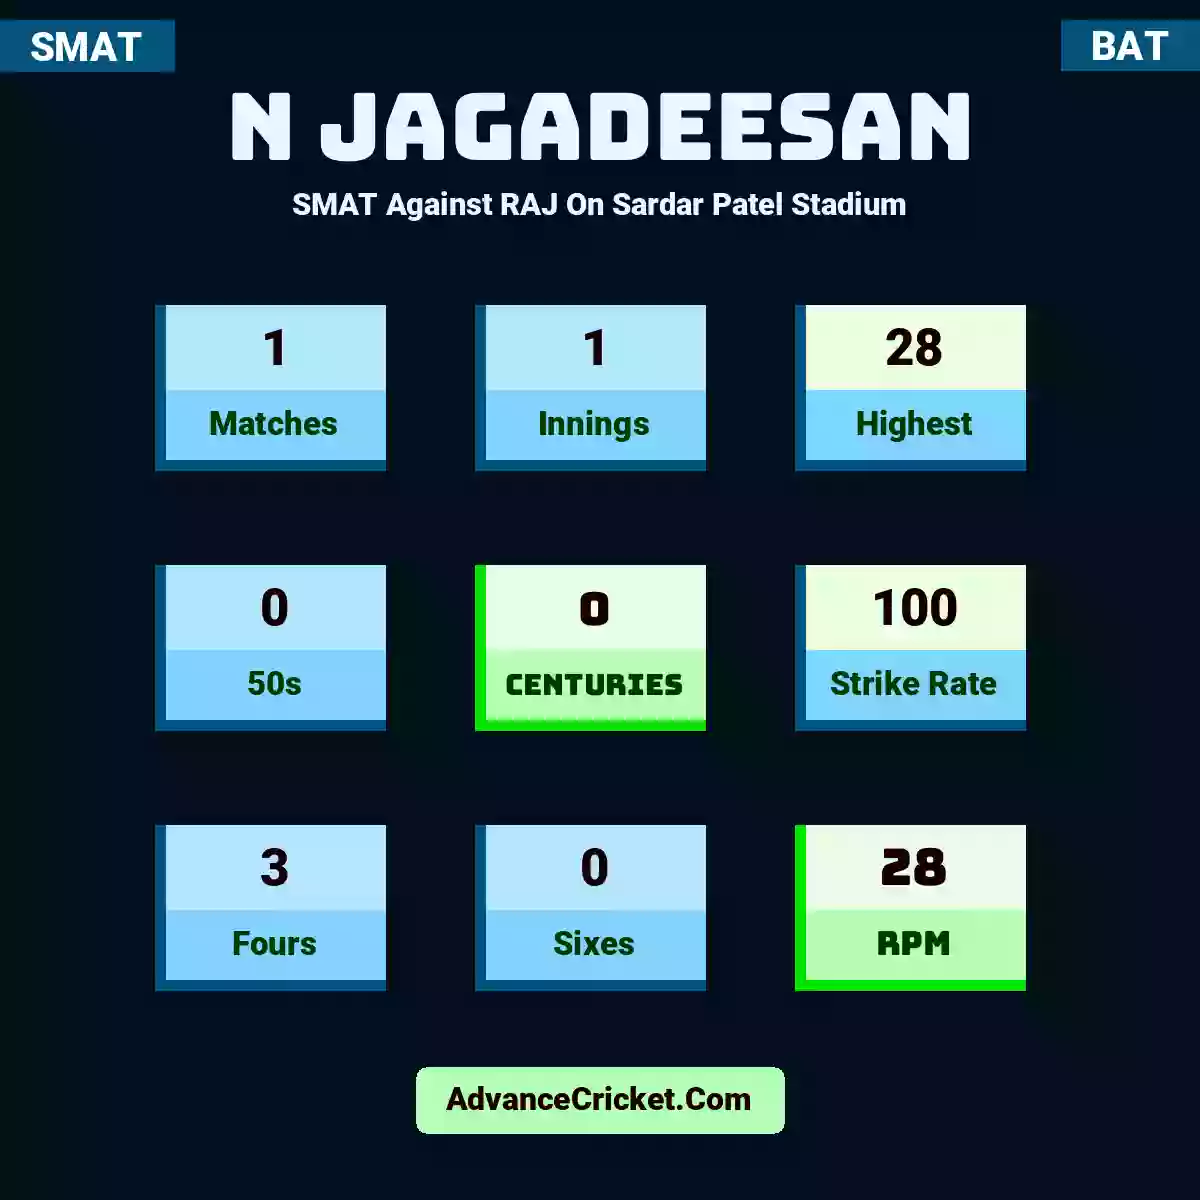 N Jagadeesan SMAT  Against RAJ On Sardar Patel Stadium, N Jagadeesan played 1 matches, scored 28 runs as highest, 0 half-centuries, and 0 centuries, with a strike rate of 100. N.Jagadeesan hit 3 fours and 0 sixes, with an RPM of 28.